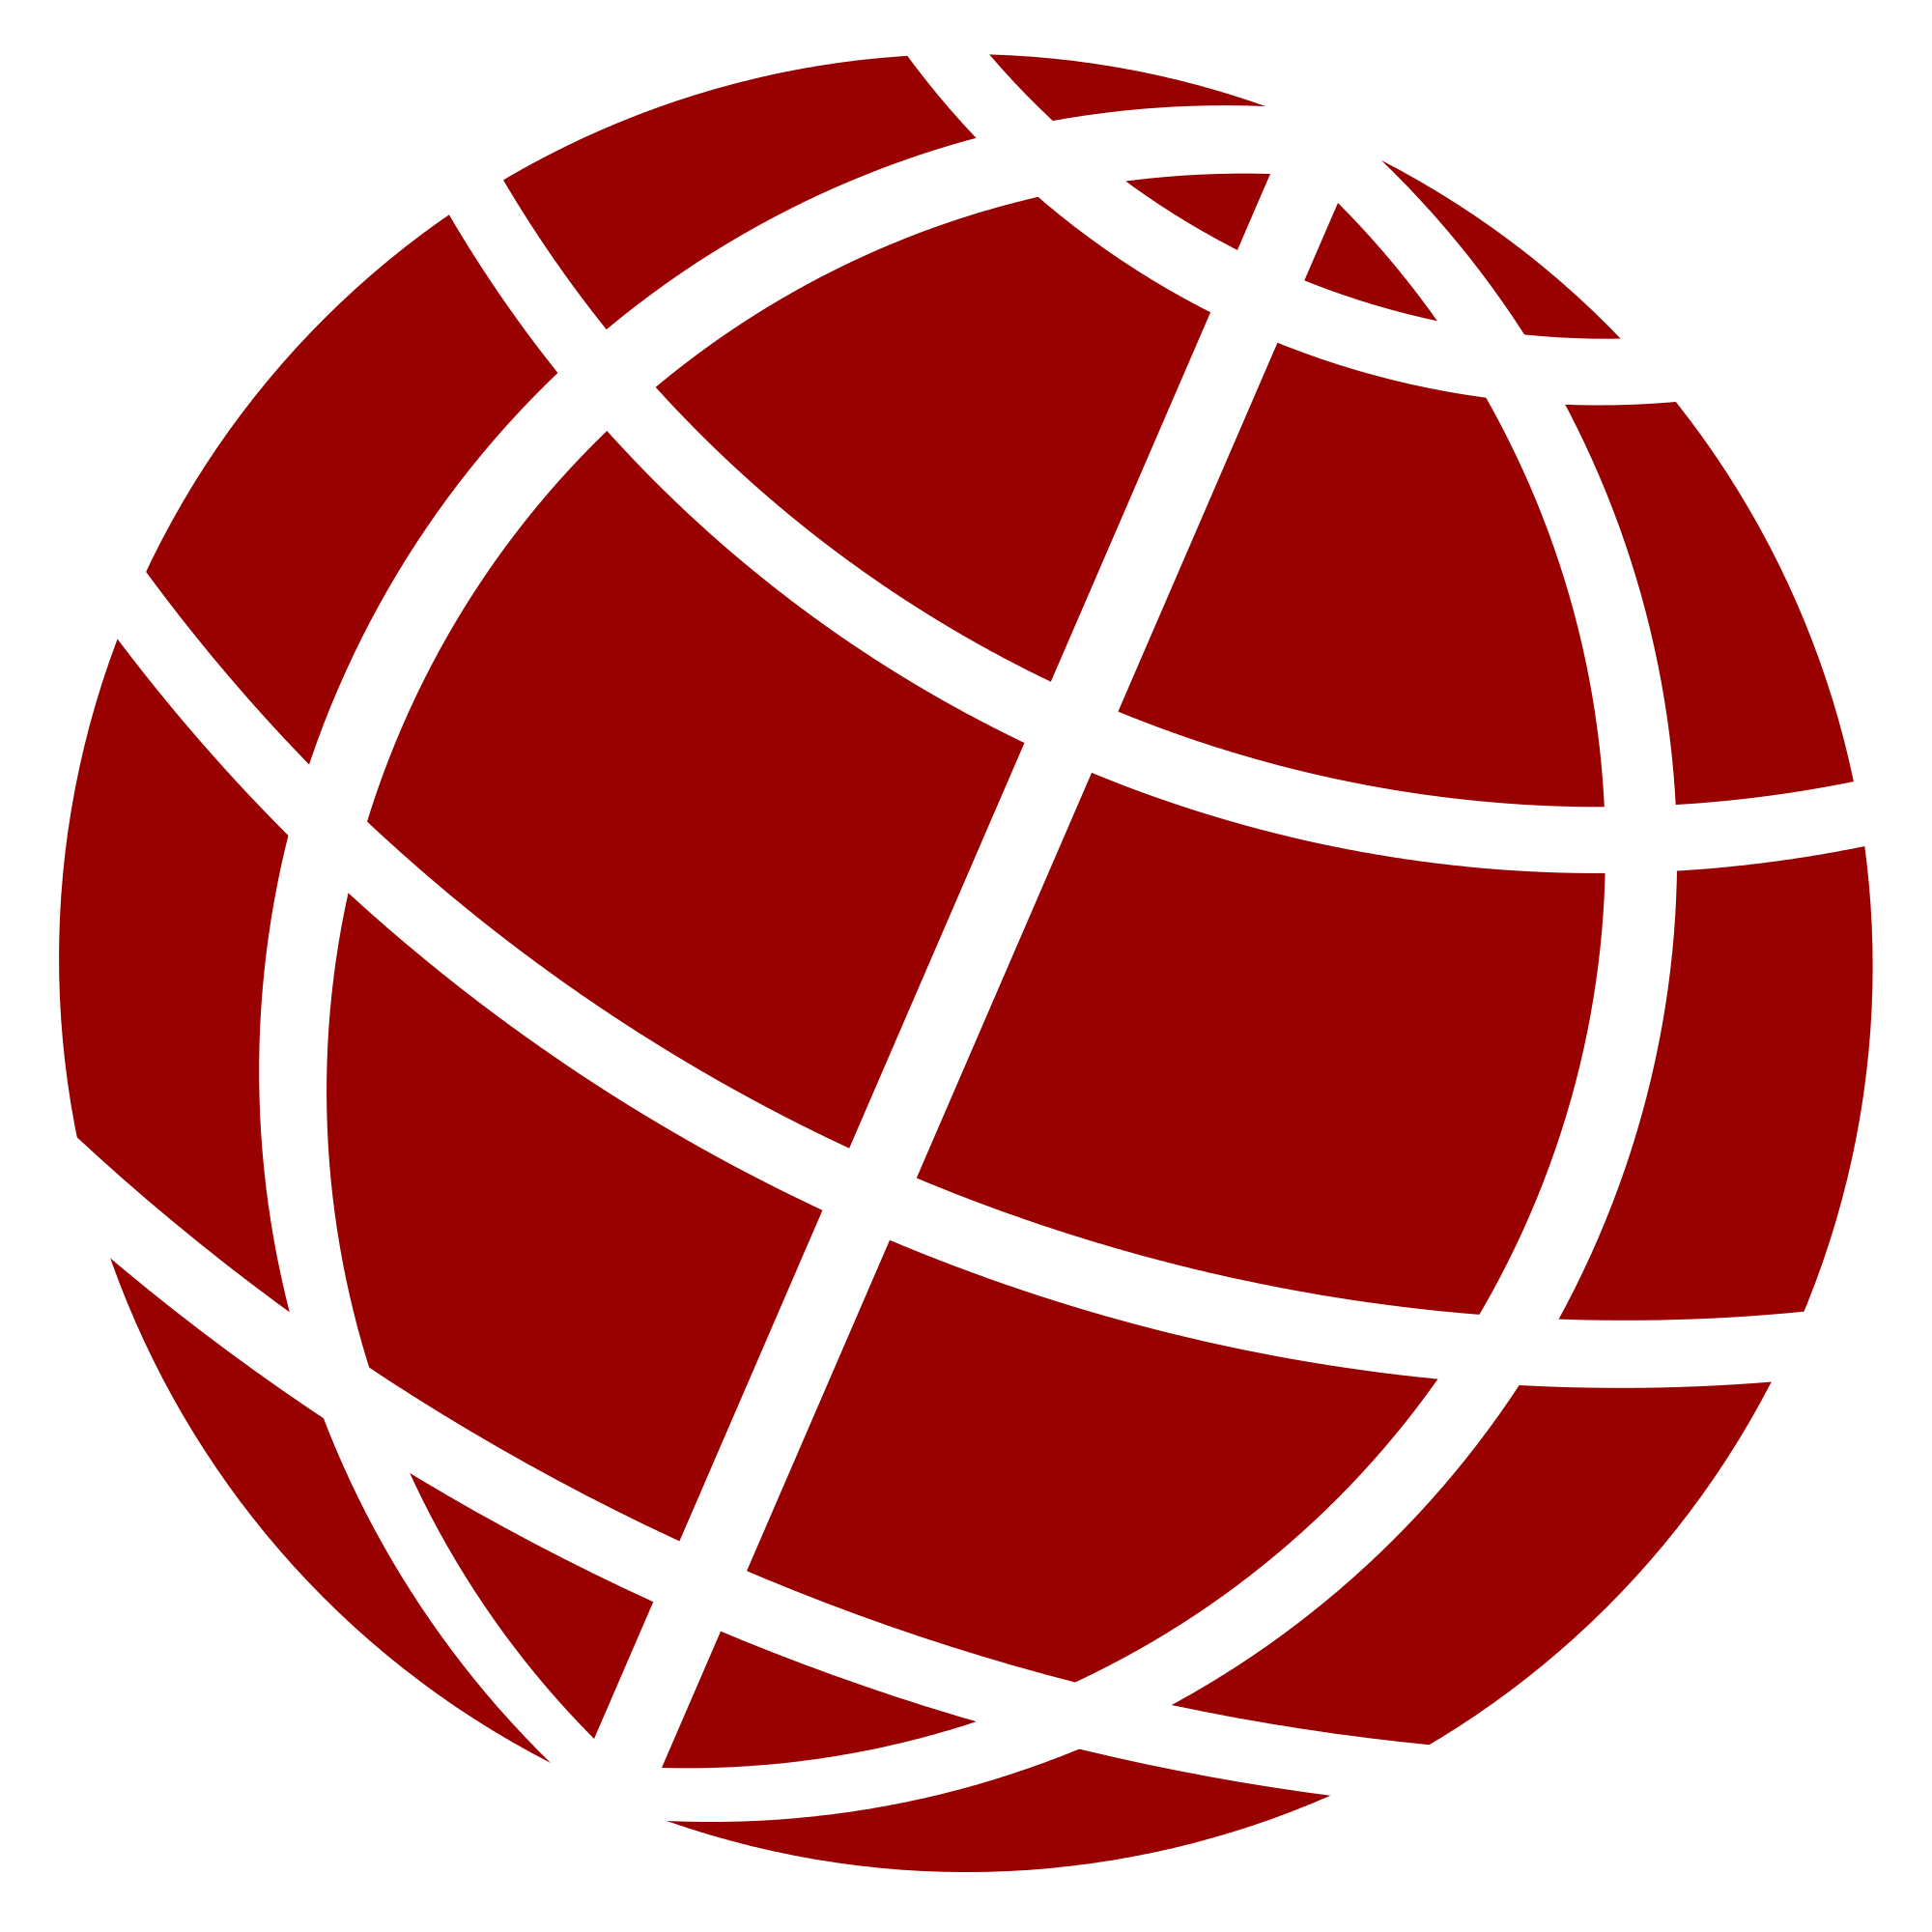 Red Website Logo - Globe PNG Logo Image Logo Png